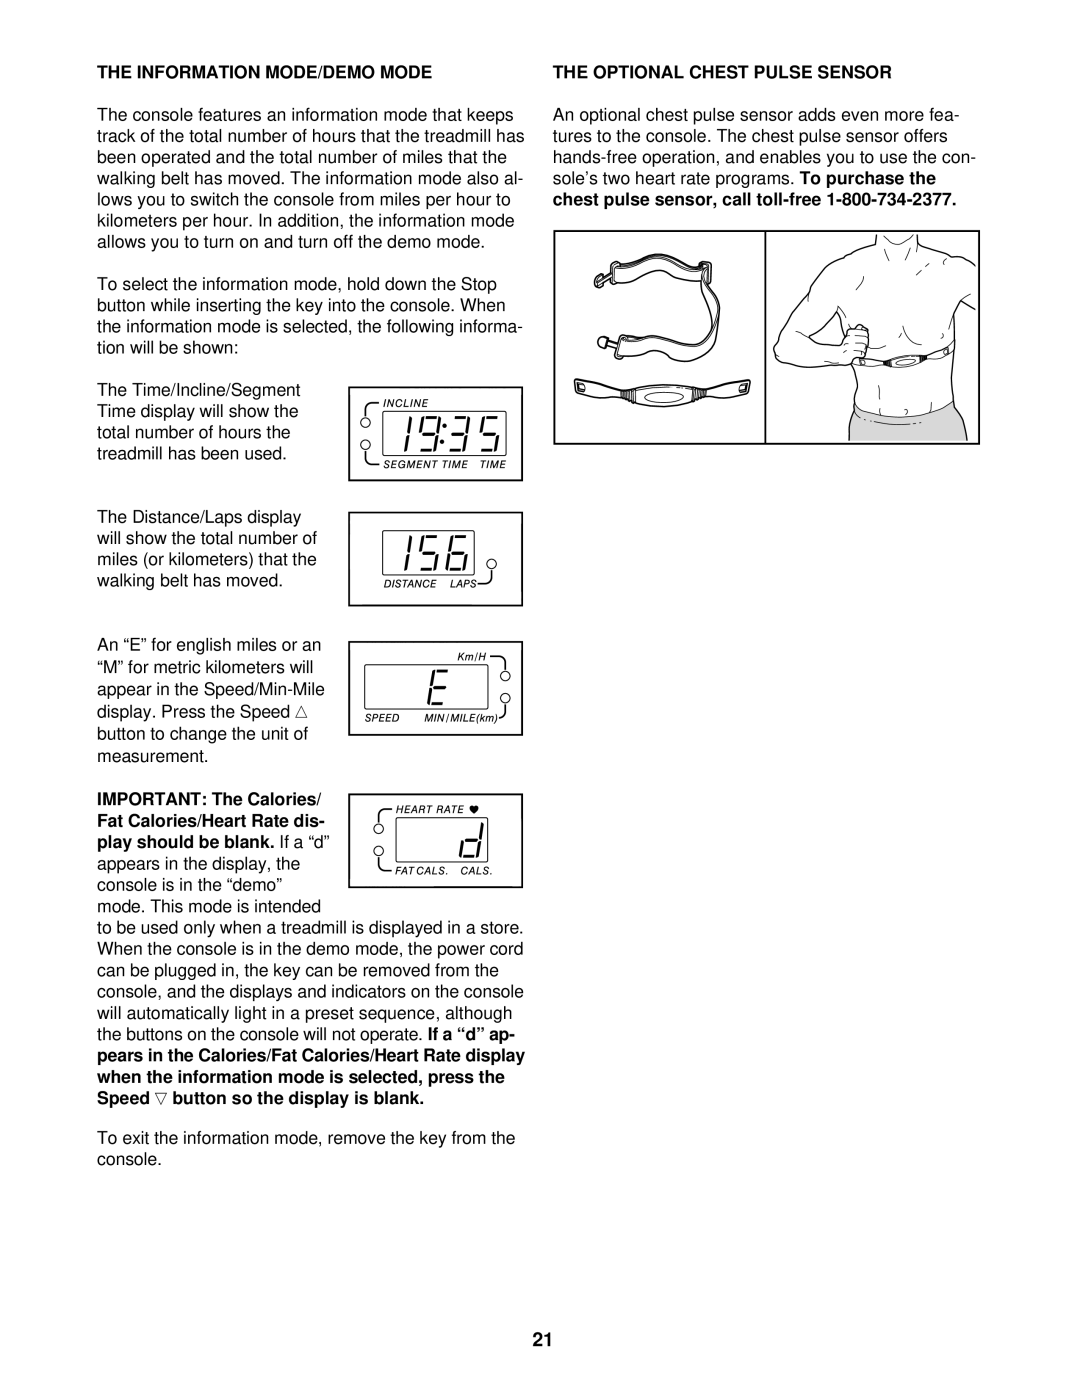 ProForm PFTL59921 user manual Information MODE/DEMO Mode, Optional Chest Pulse Sensor 